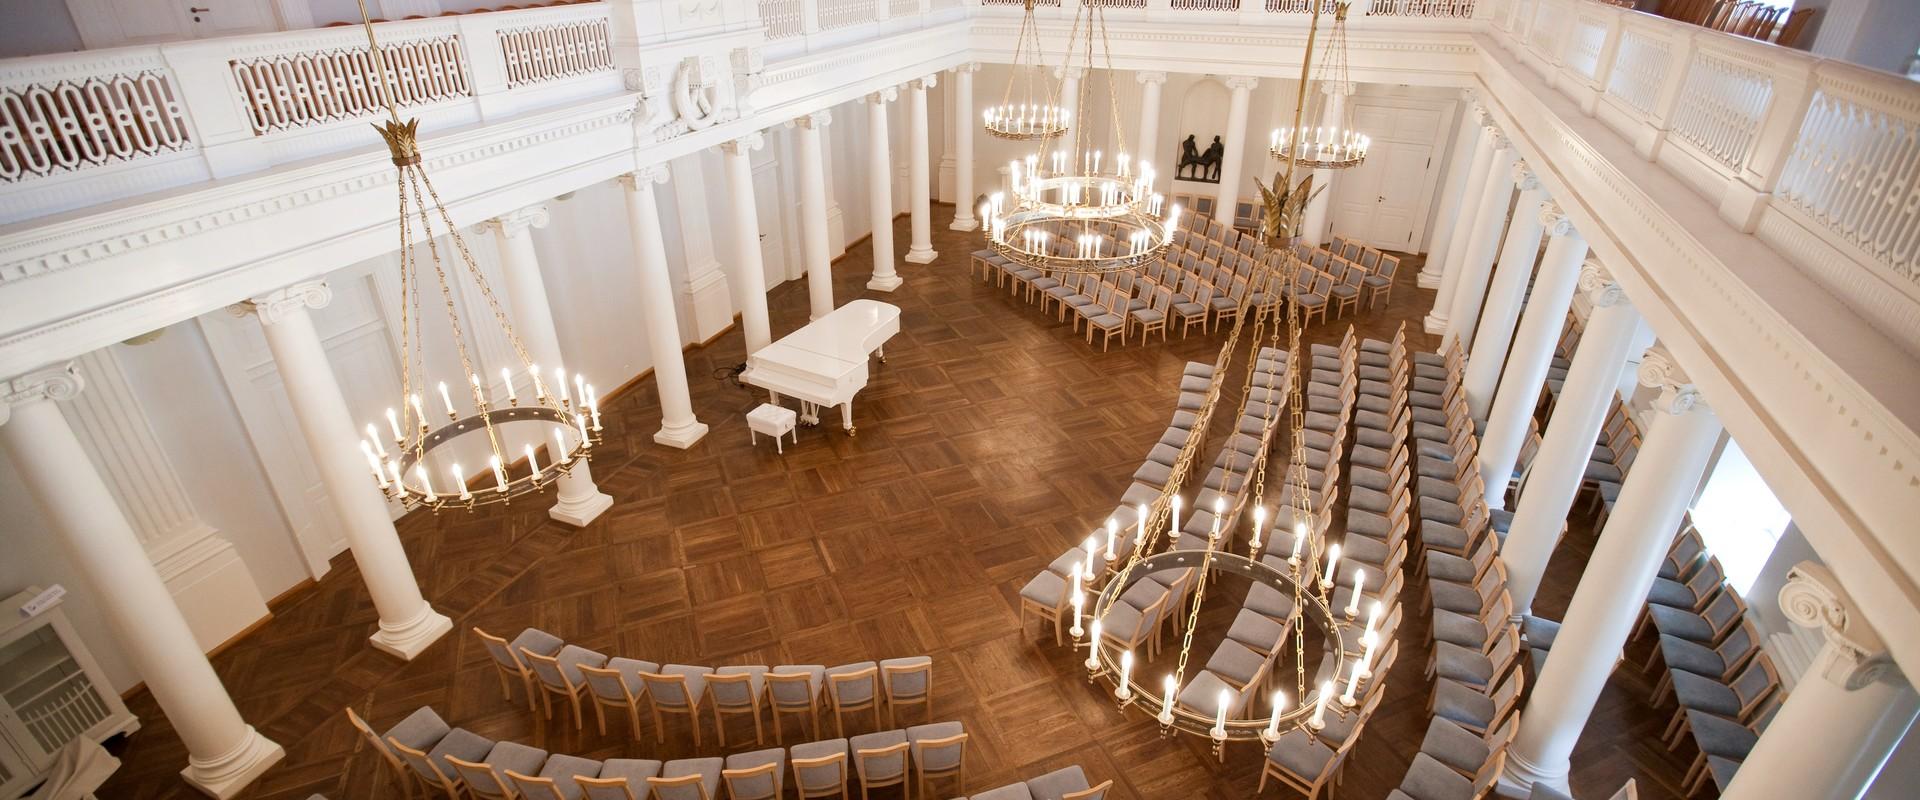 Assembly Hall of the University of Tartu